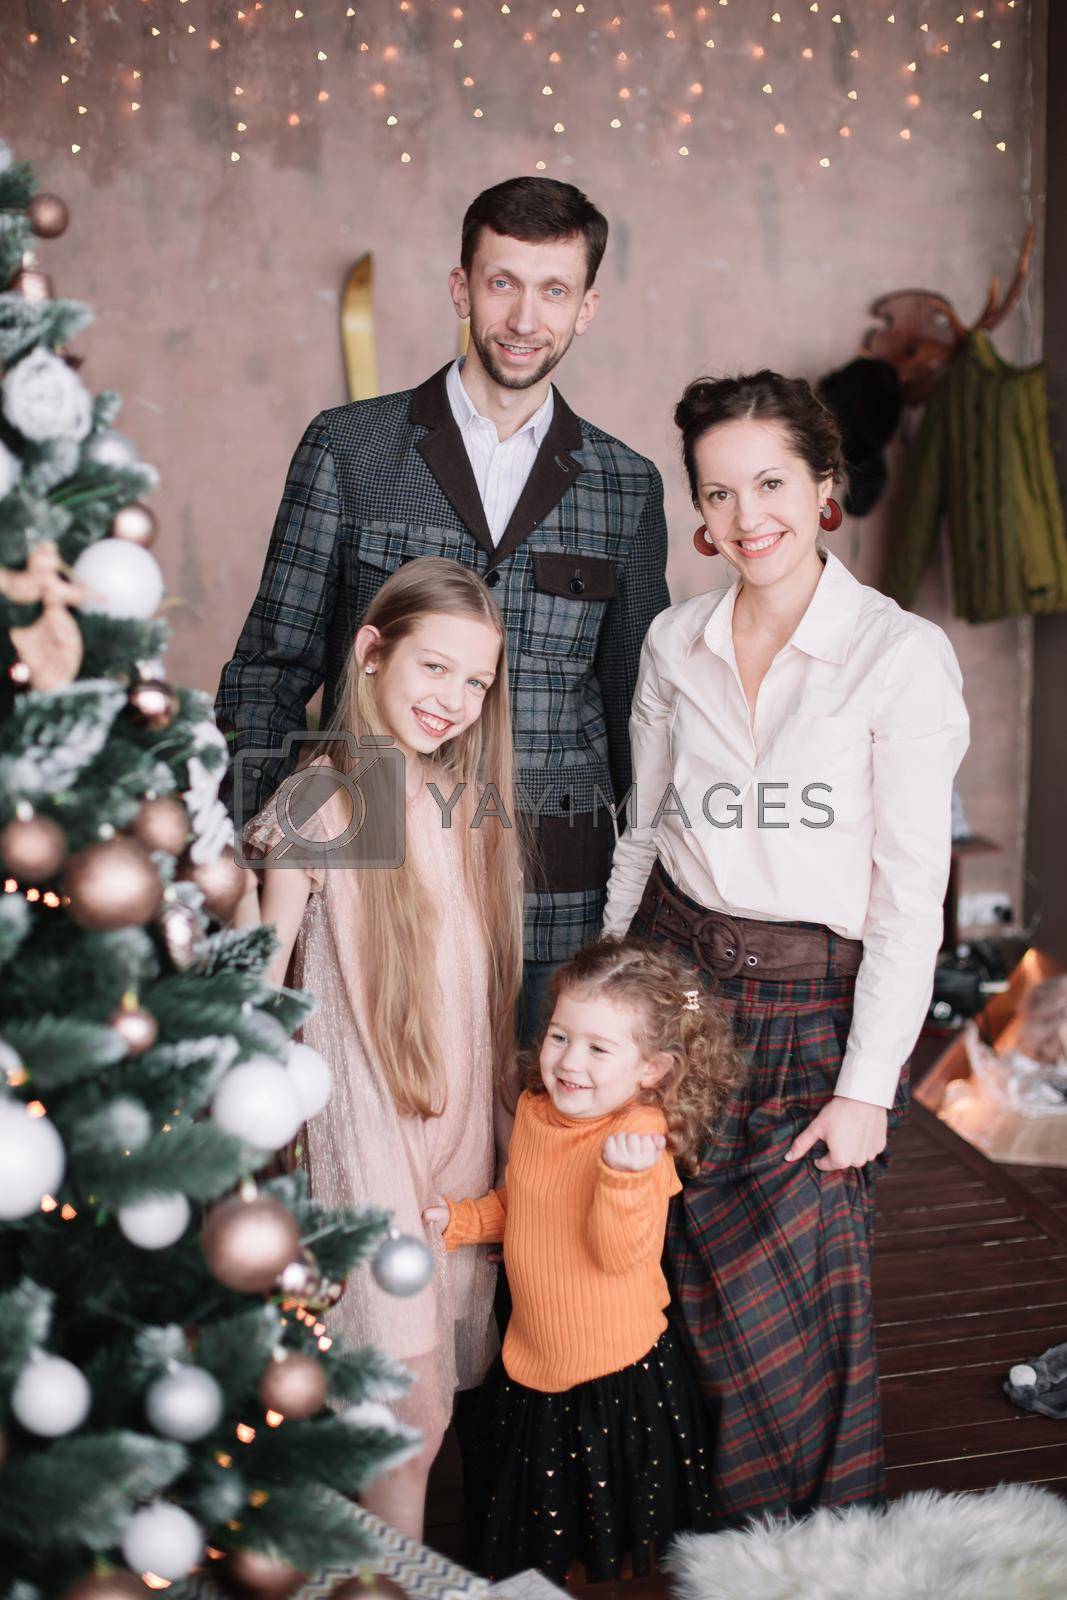 Royalty free image of family photo near the elegant Christmas tree by SmartPhotoLab